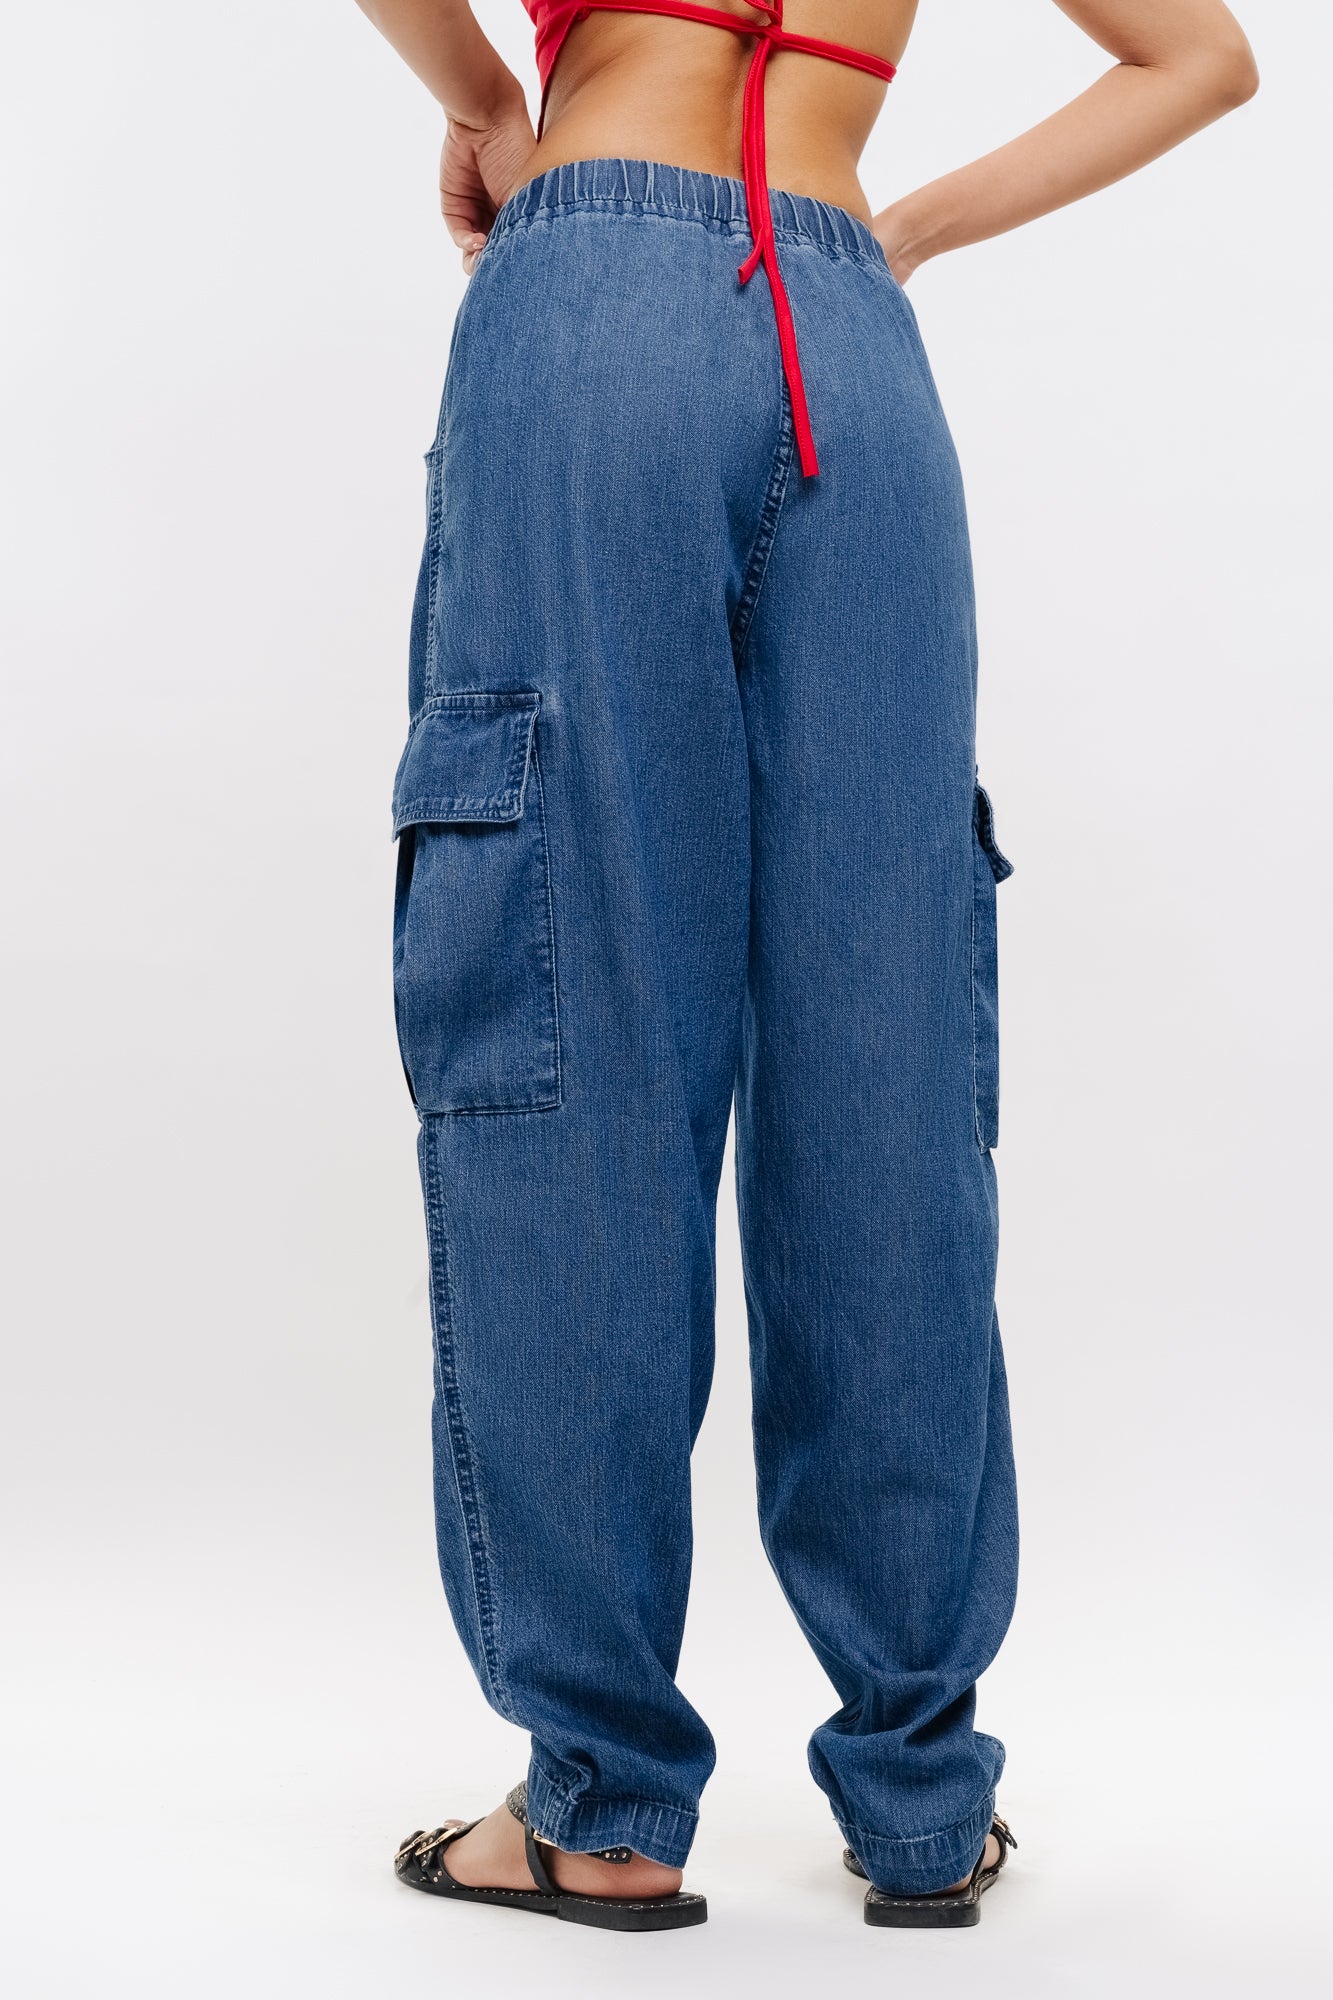 Lady Wide Leg Jeans Denim Pants Trousers Belt High Waist Baggy Casual Two  Tone | eBay